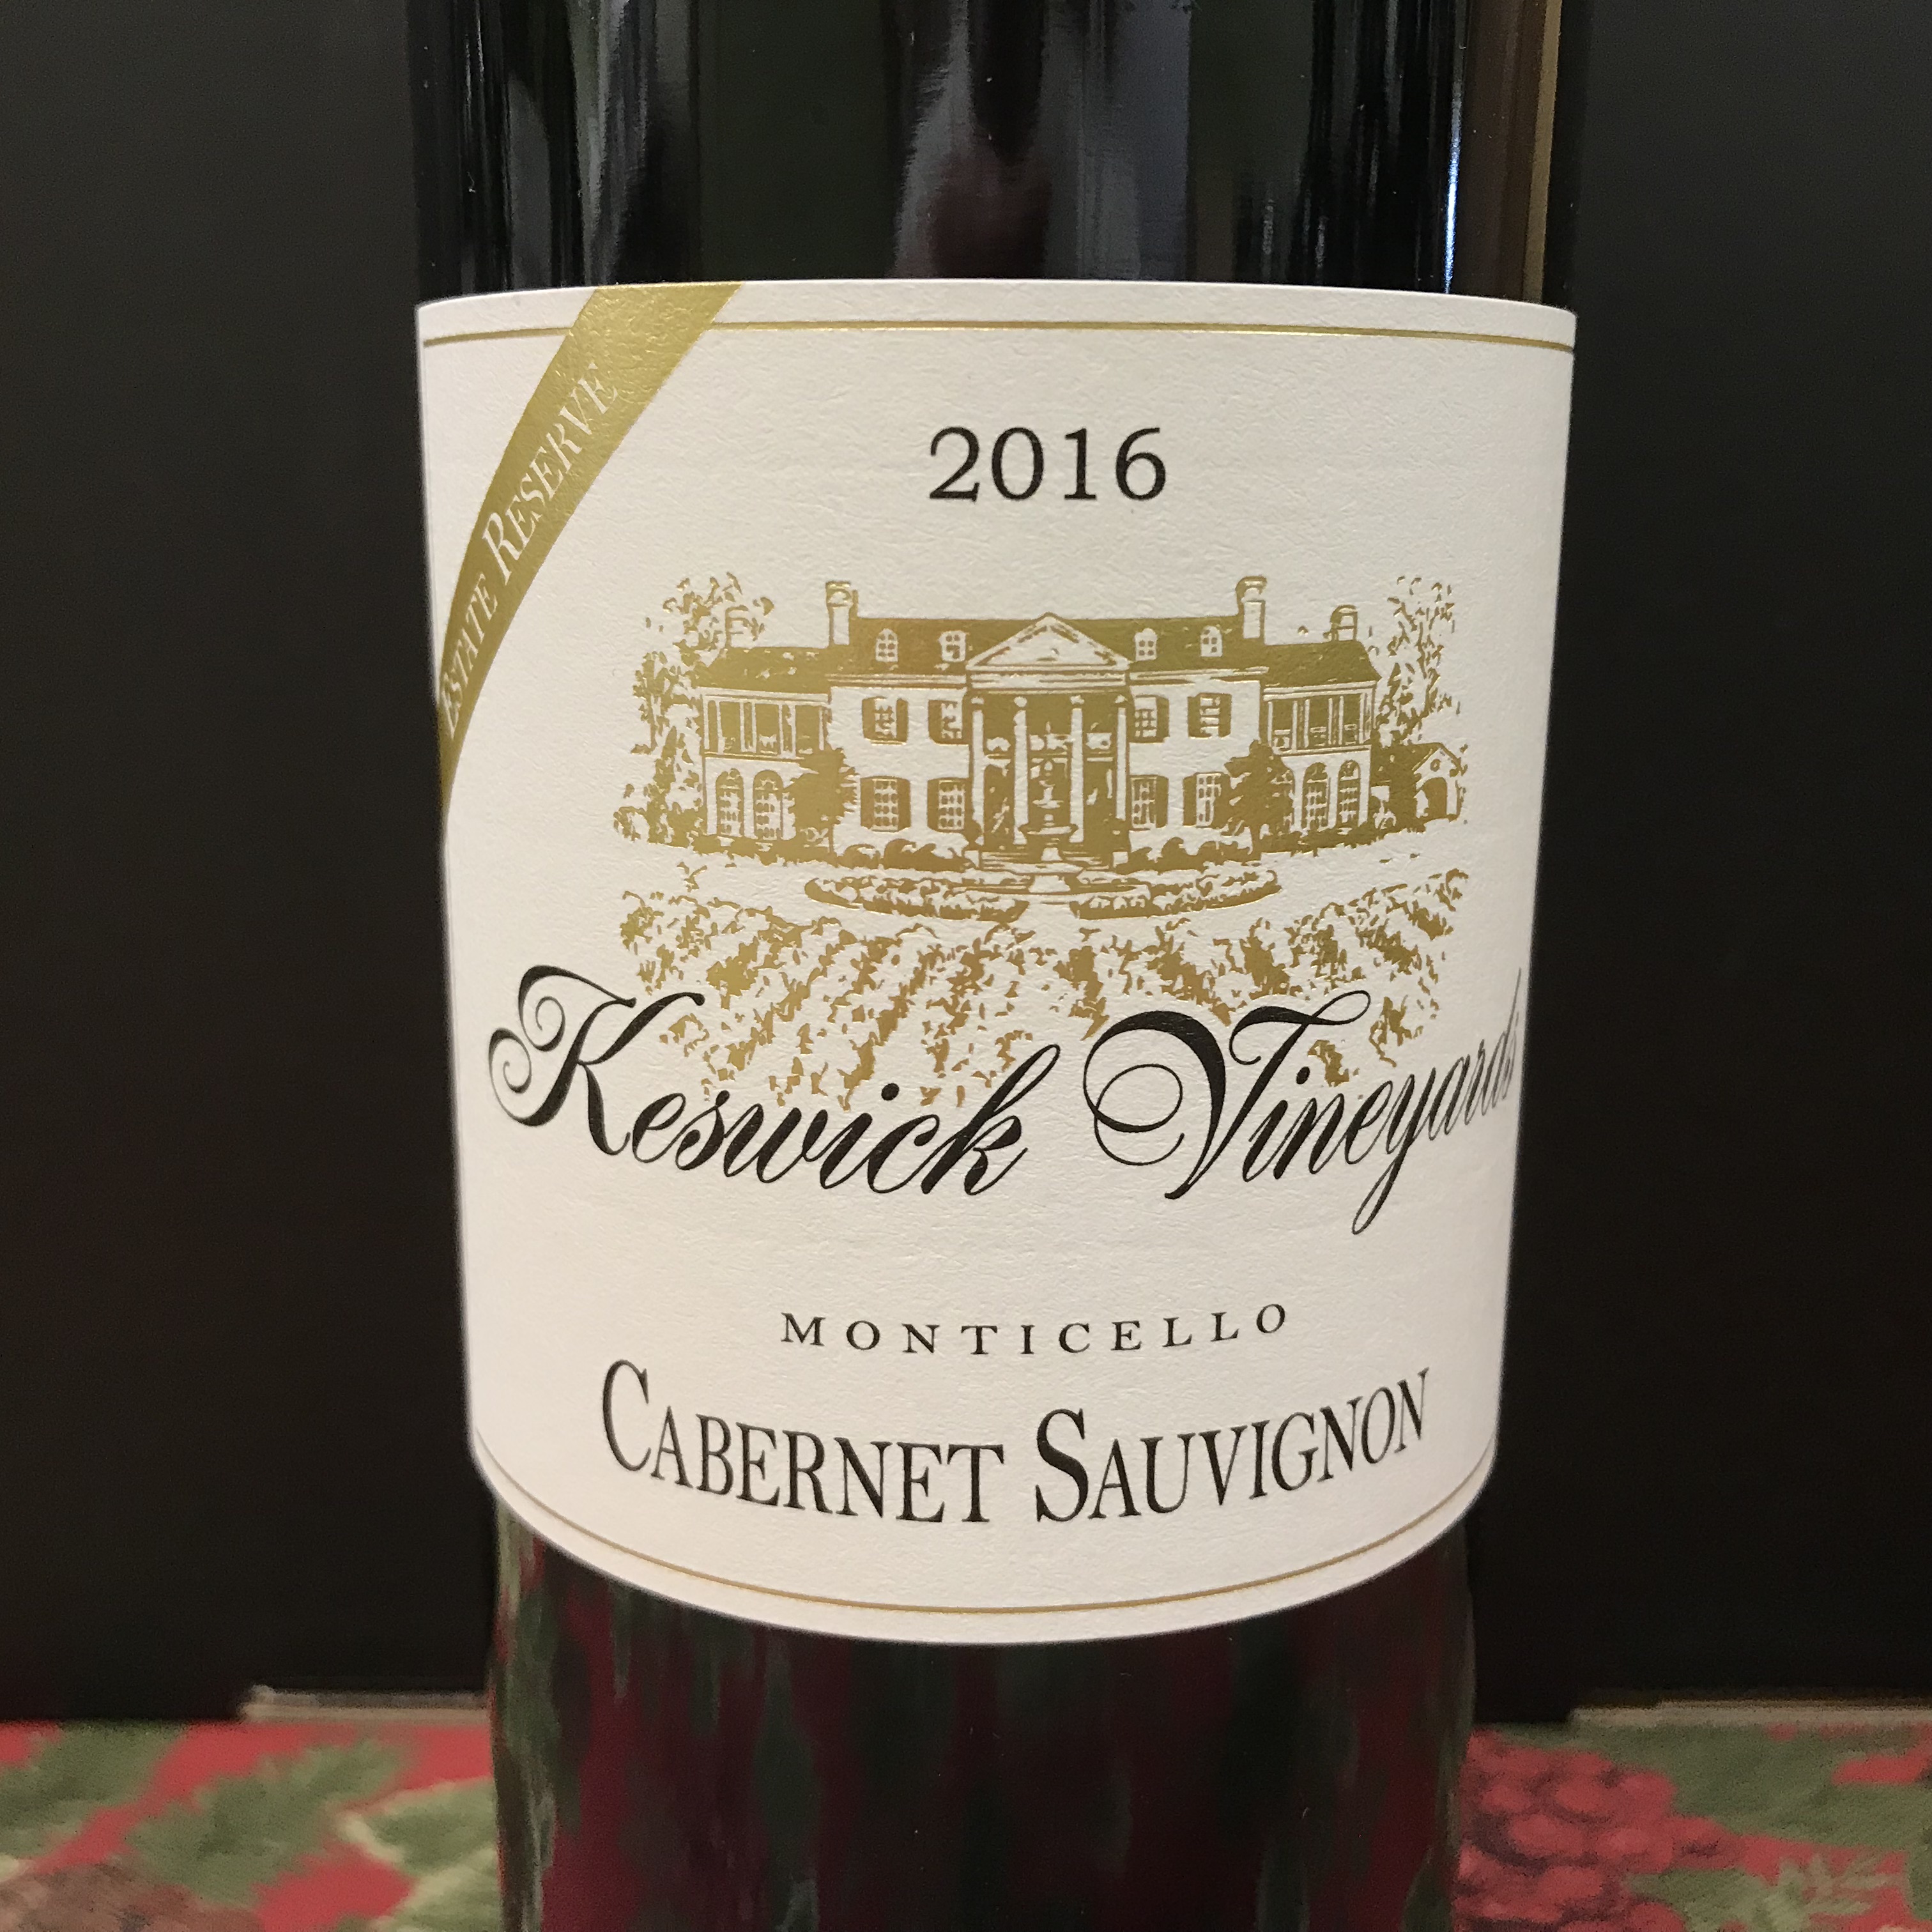 Keswick Vineyards Monticello Cabernet Sauvignon 2016